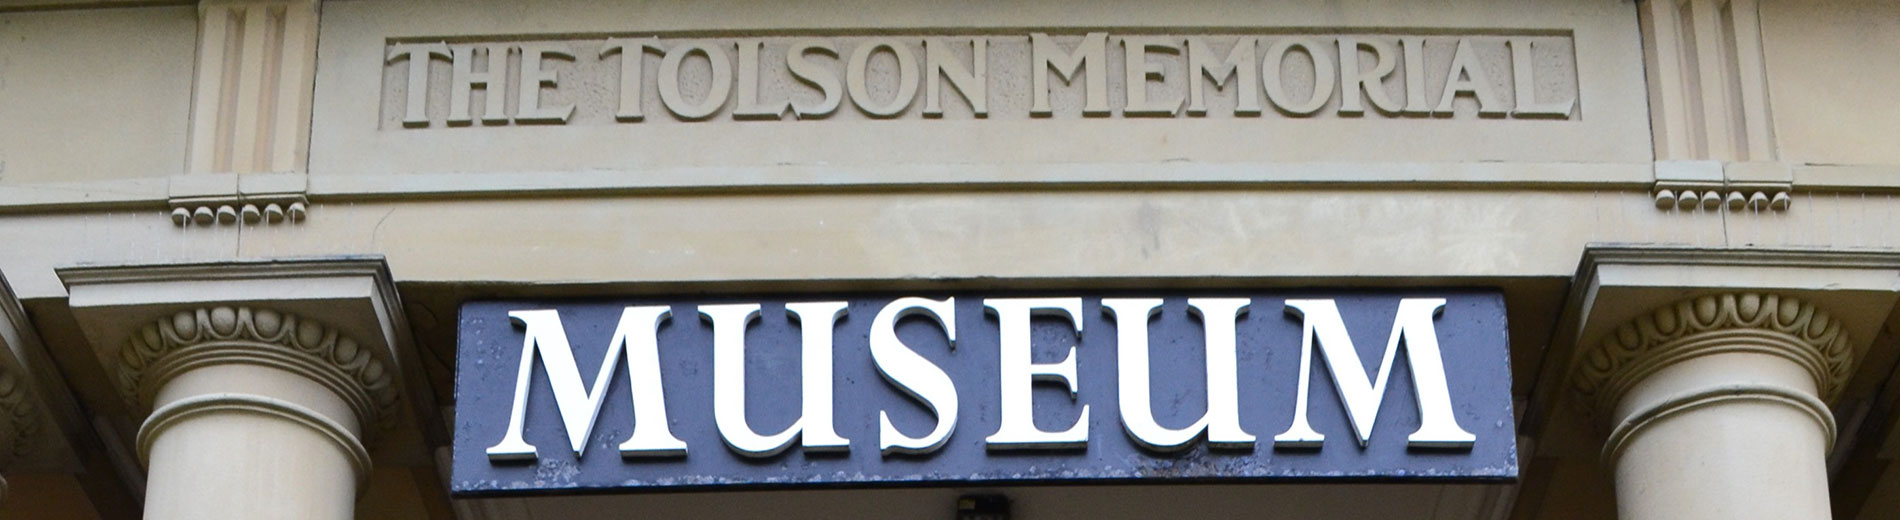 Tolson museum